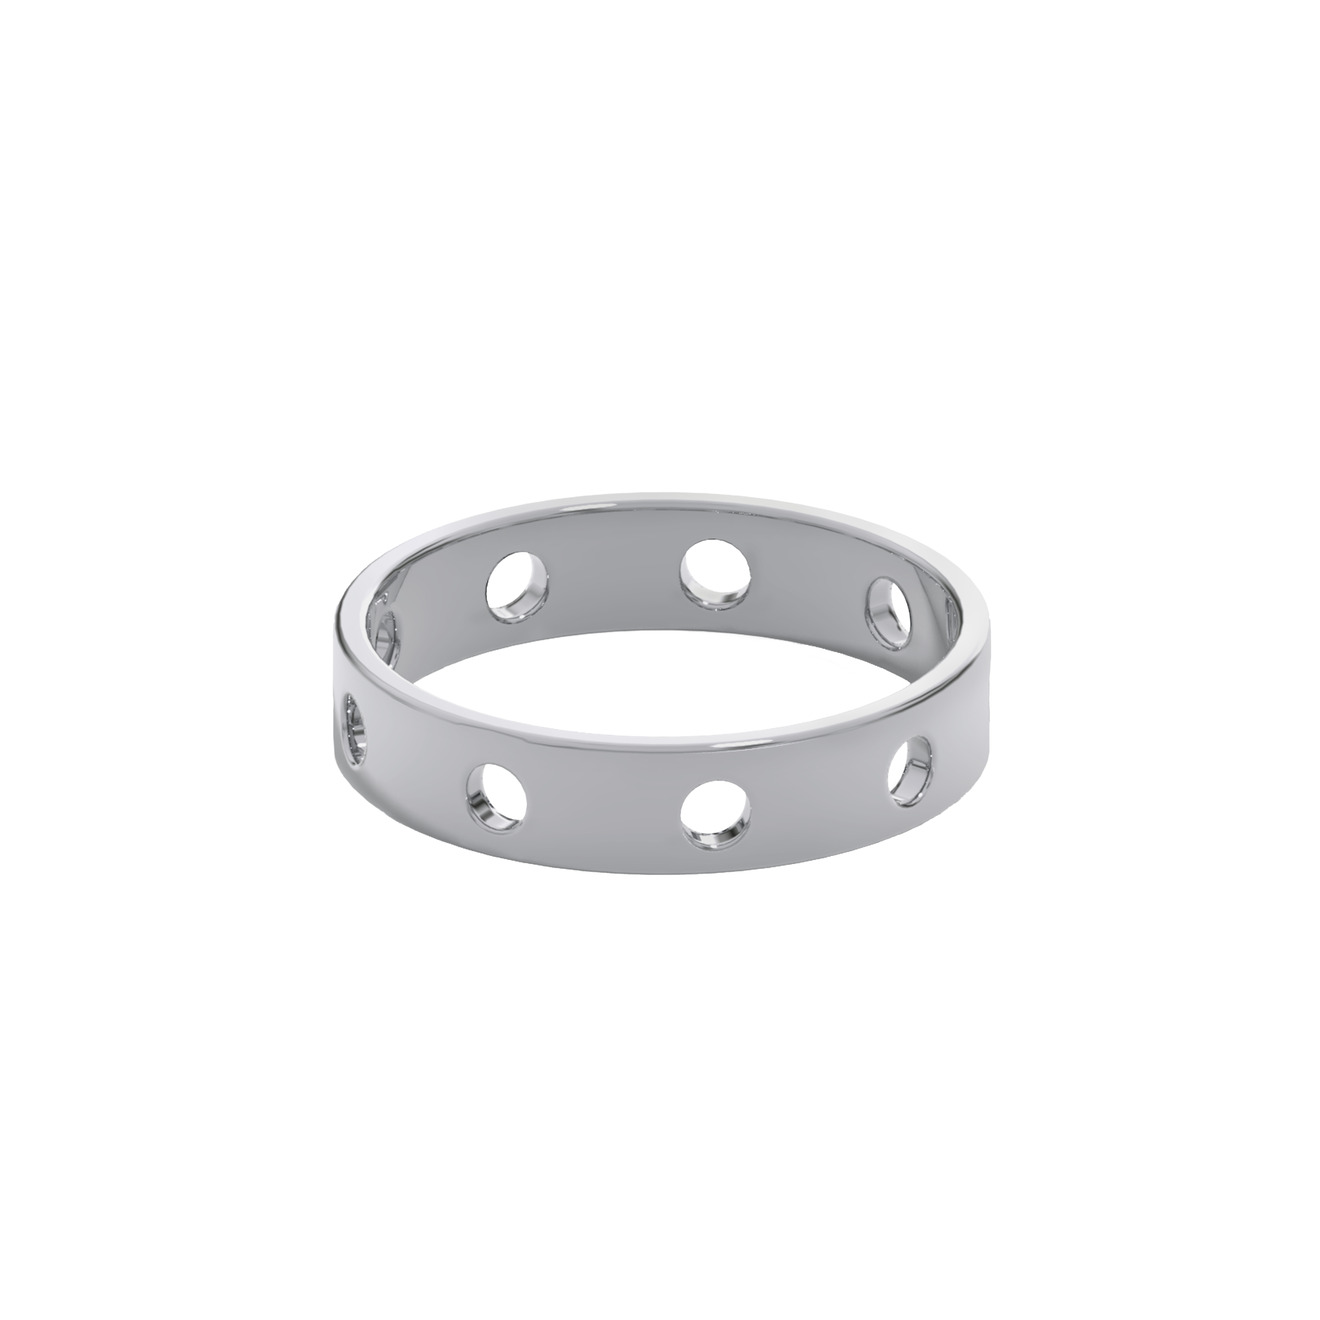 Prosto Jewelry Кольцо из серебра с окошками prosto jewelry колье из серебра с разноцветными подвесками